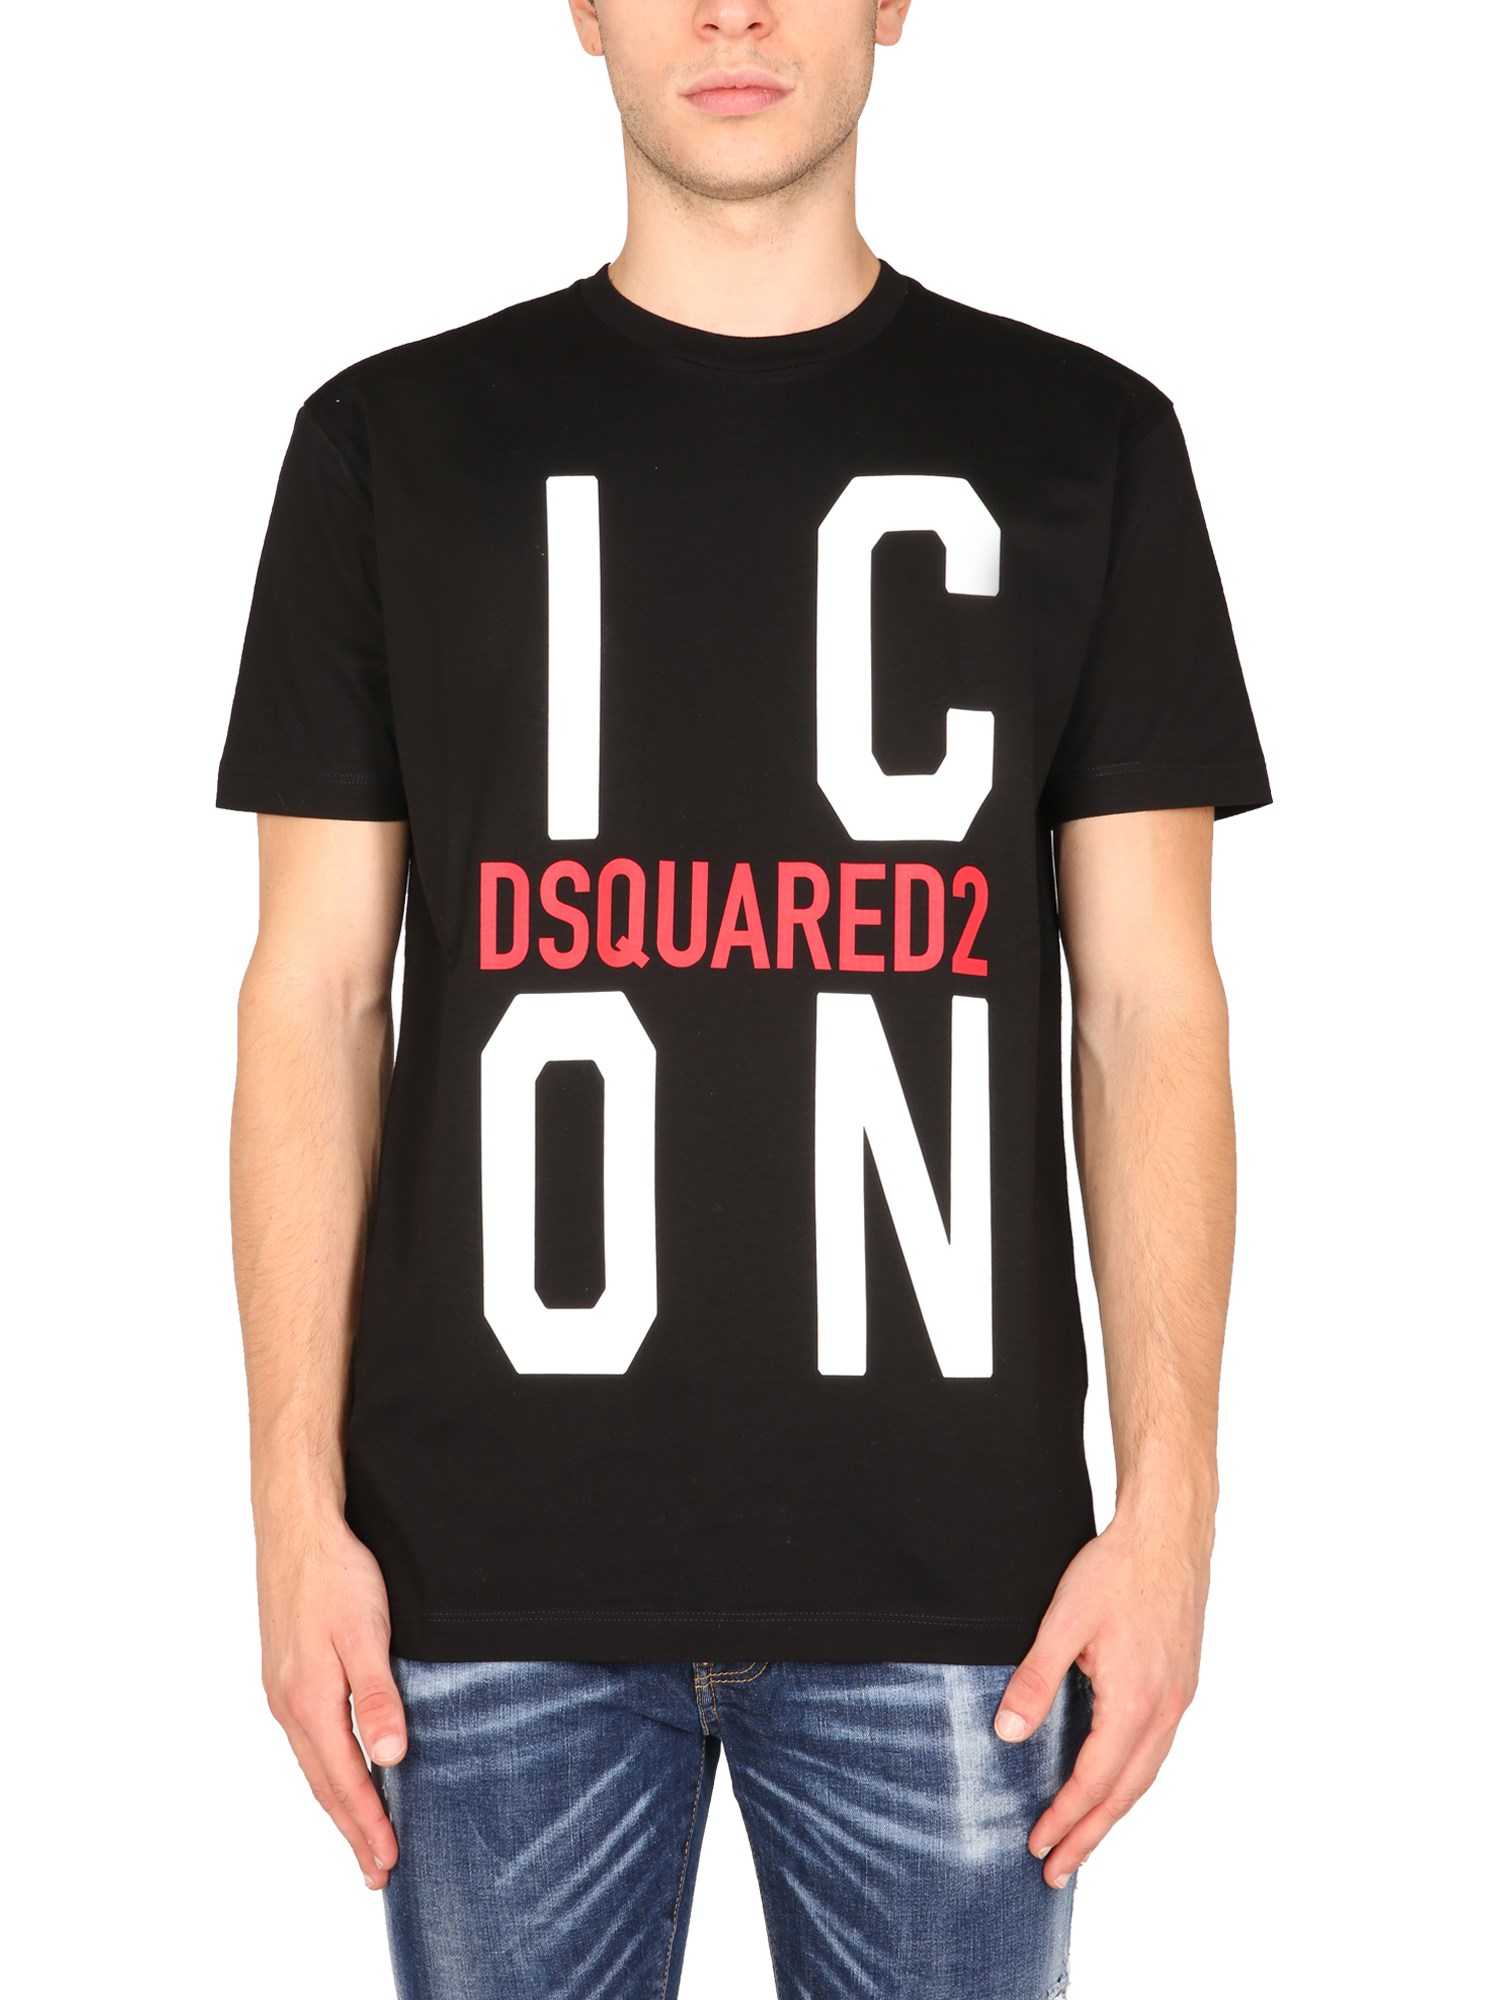 dsquared cool fit t-shirt